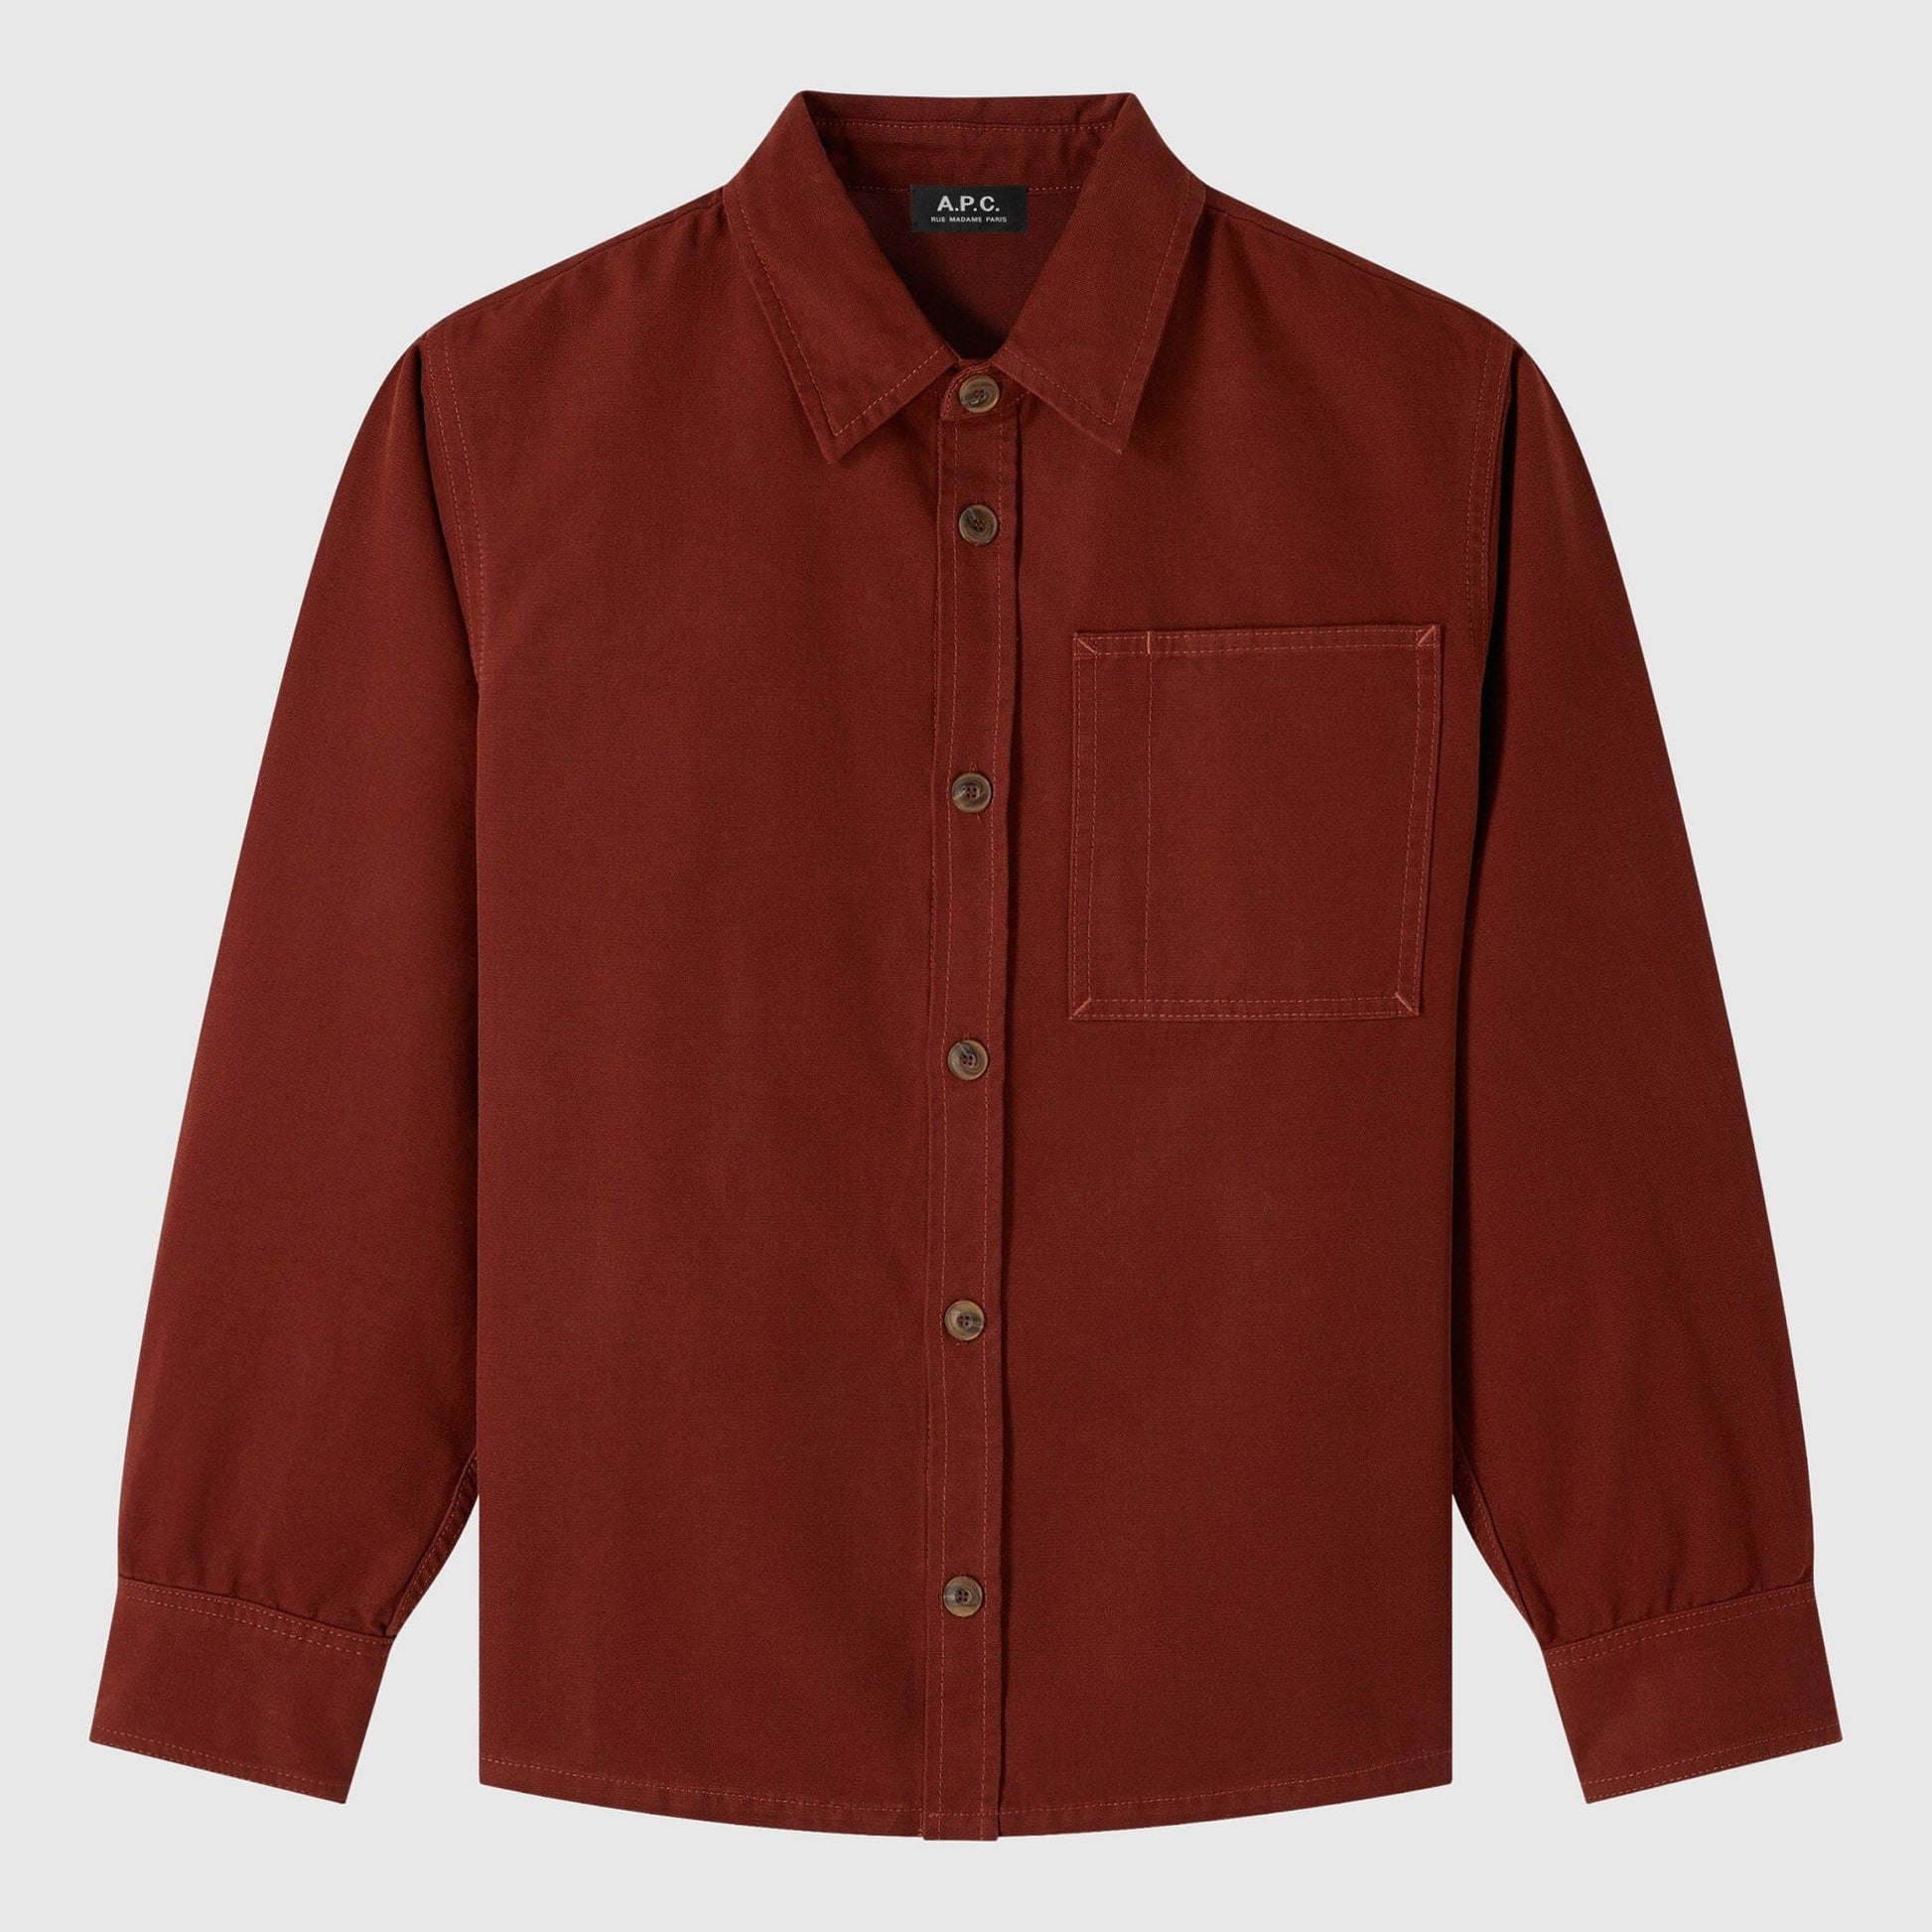 A.P.C. Cavalier Graham Overshirt - Brick Red Overshirt A.P.C. 